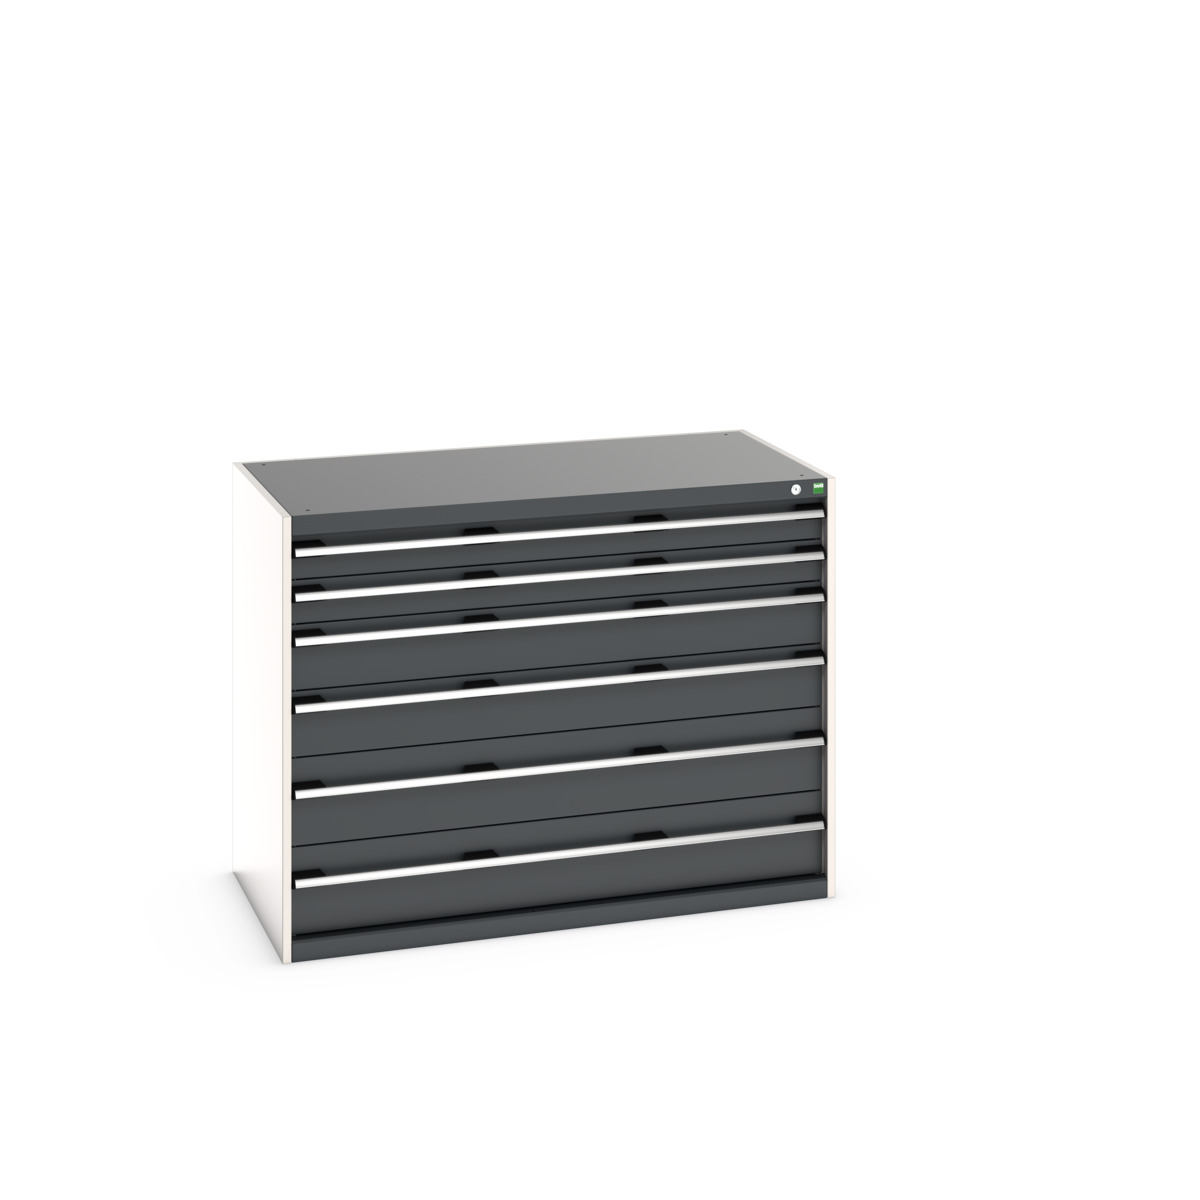 40030093. - cubio drawer cabinet